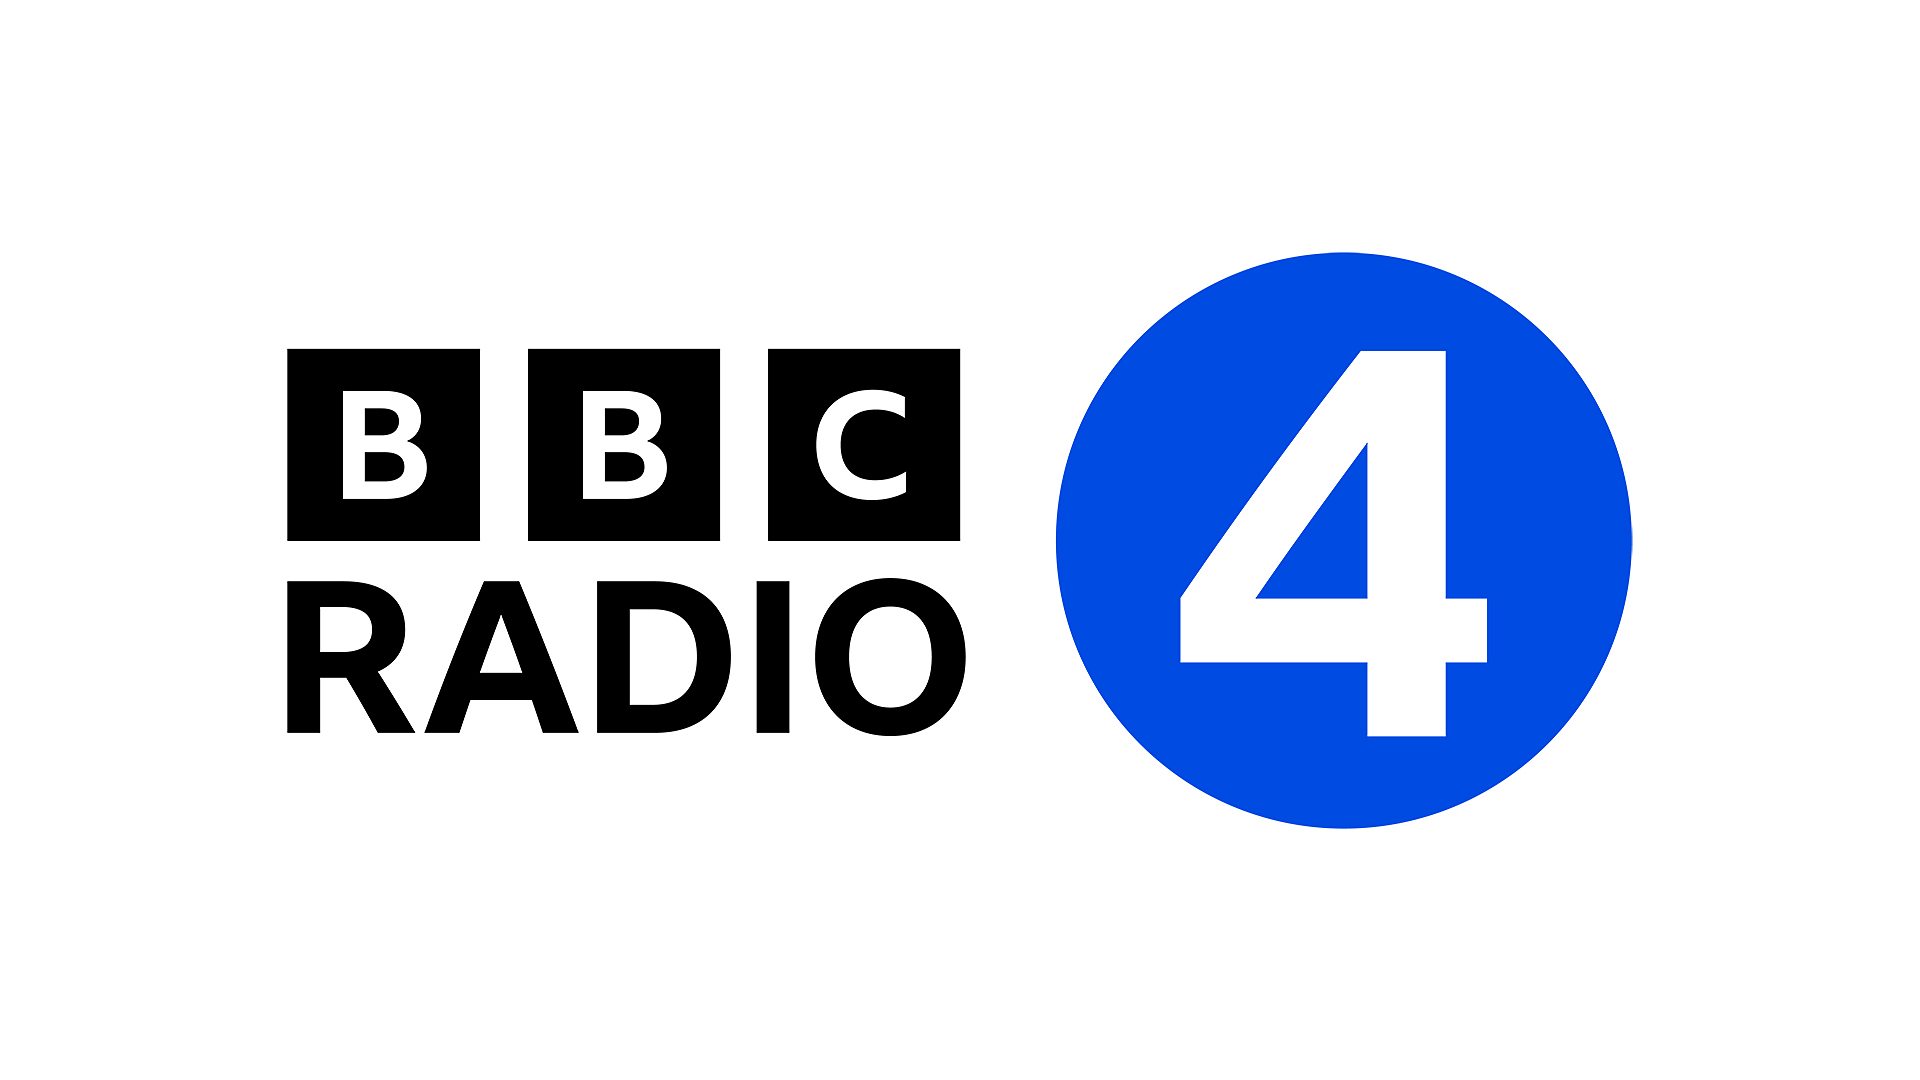 BBC - About Radio